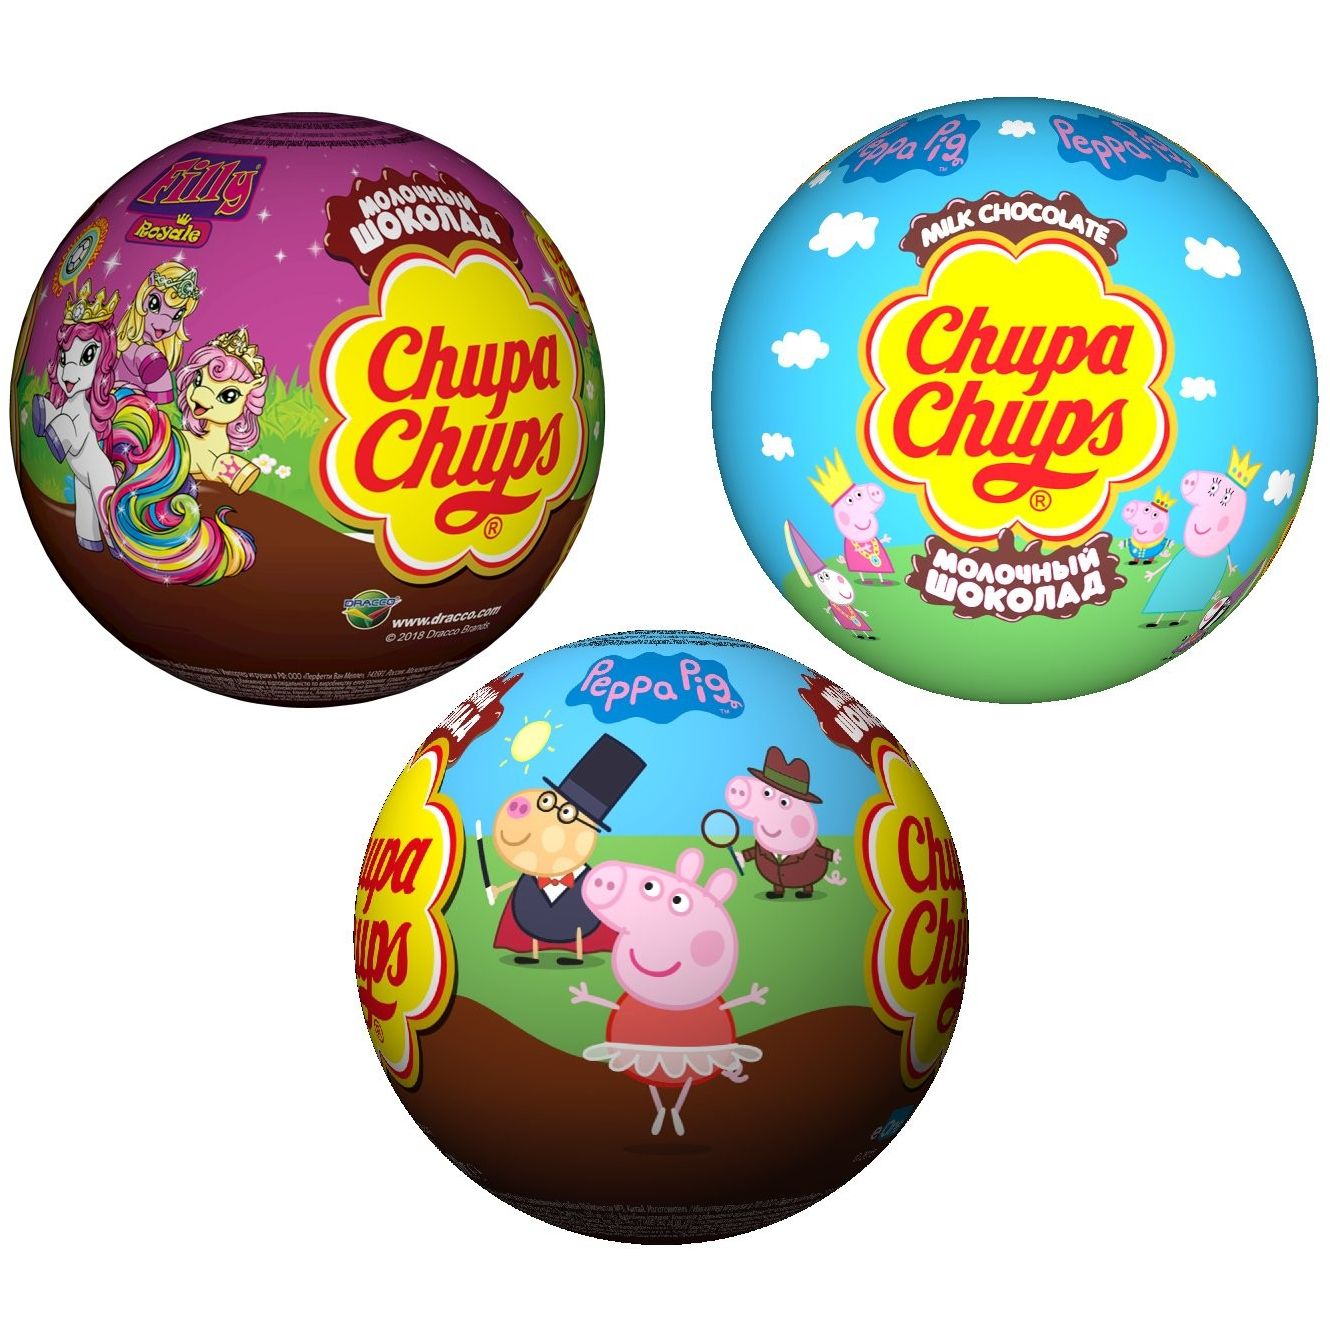 Chupa chups шоколадный шар. Шоколадные шары chupa chups 20г. Шоколадный шар chupa chups с игрушкой-сюрпризом, 20 г. Шоколадный шар chupa chups с игрушкой 20г. Чупа чупс шарики